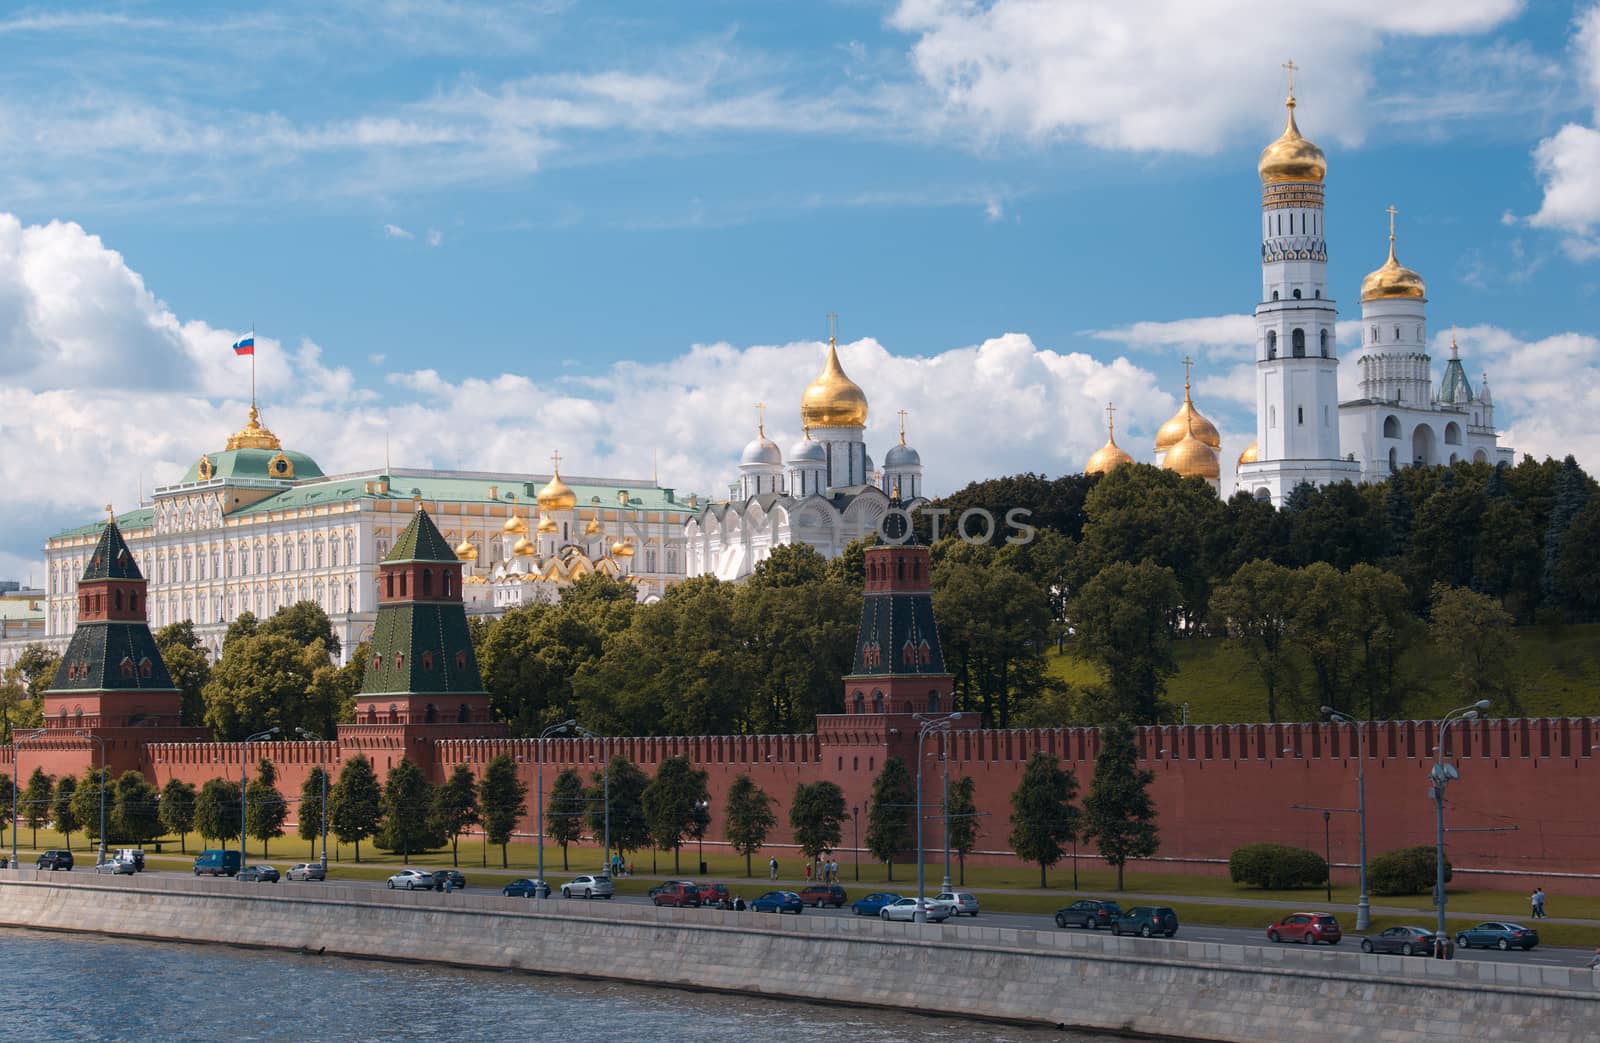 Moscow Kremlin. The Grand Kremlin Palace and waterfront at sunny summer day.